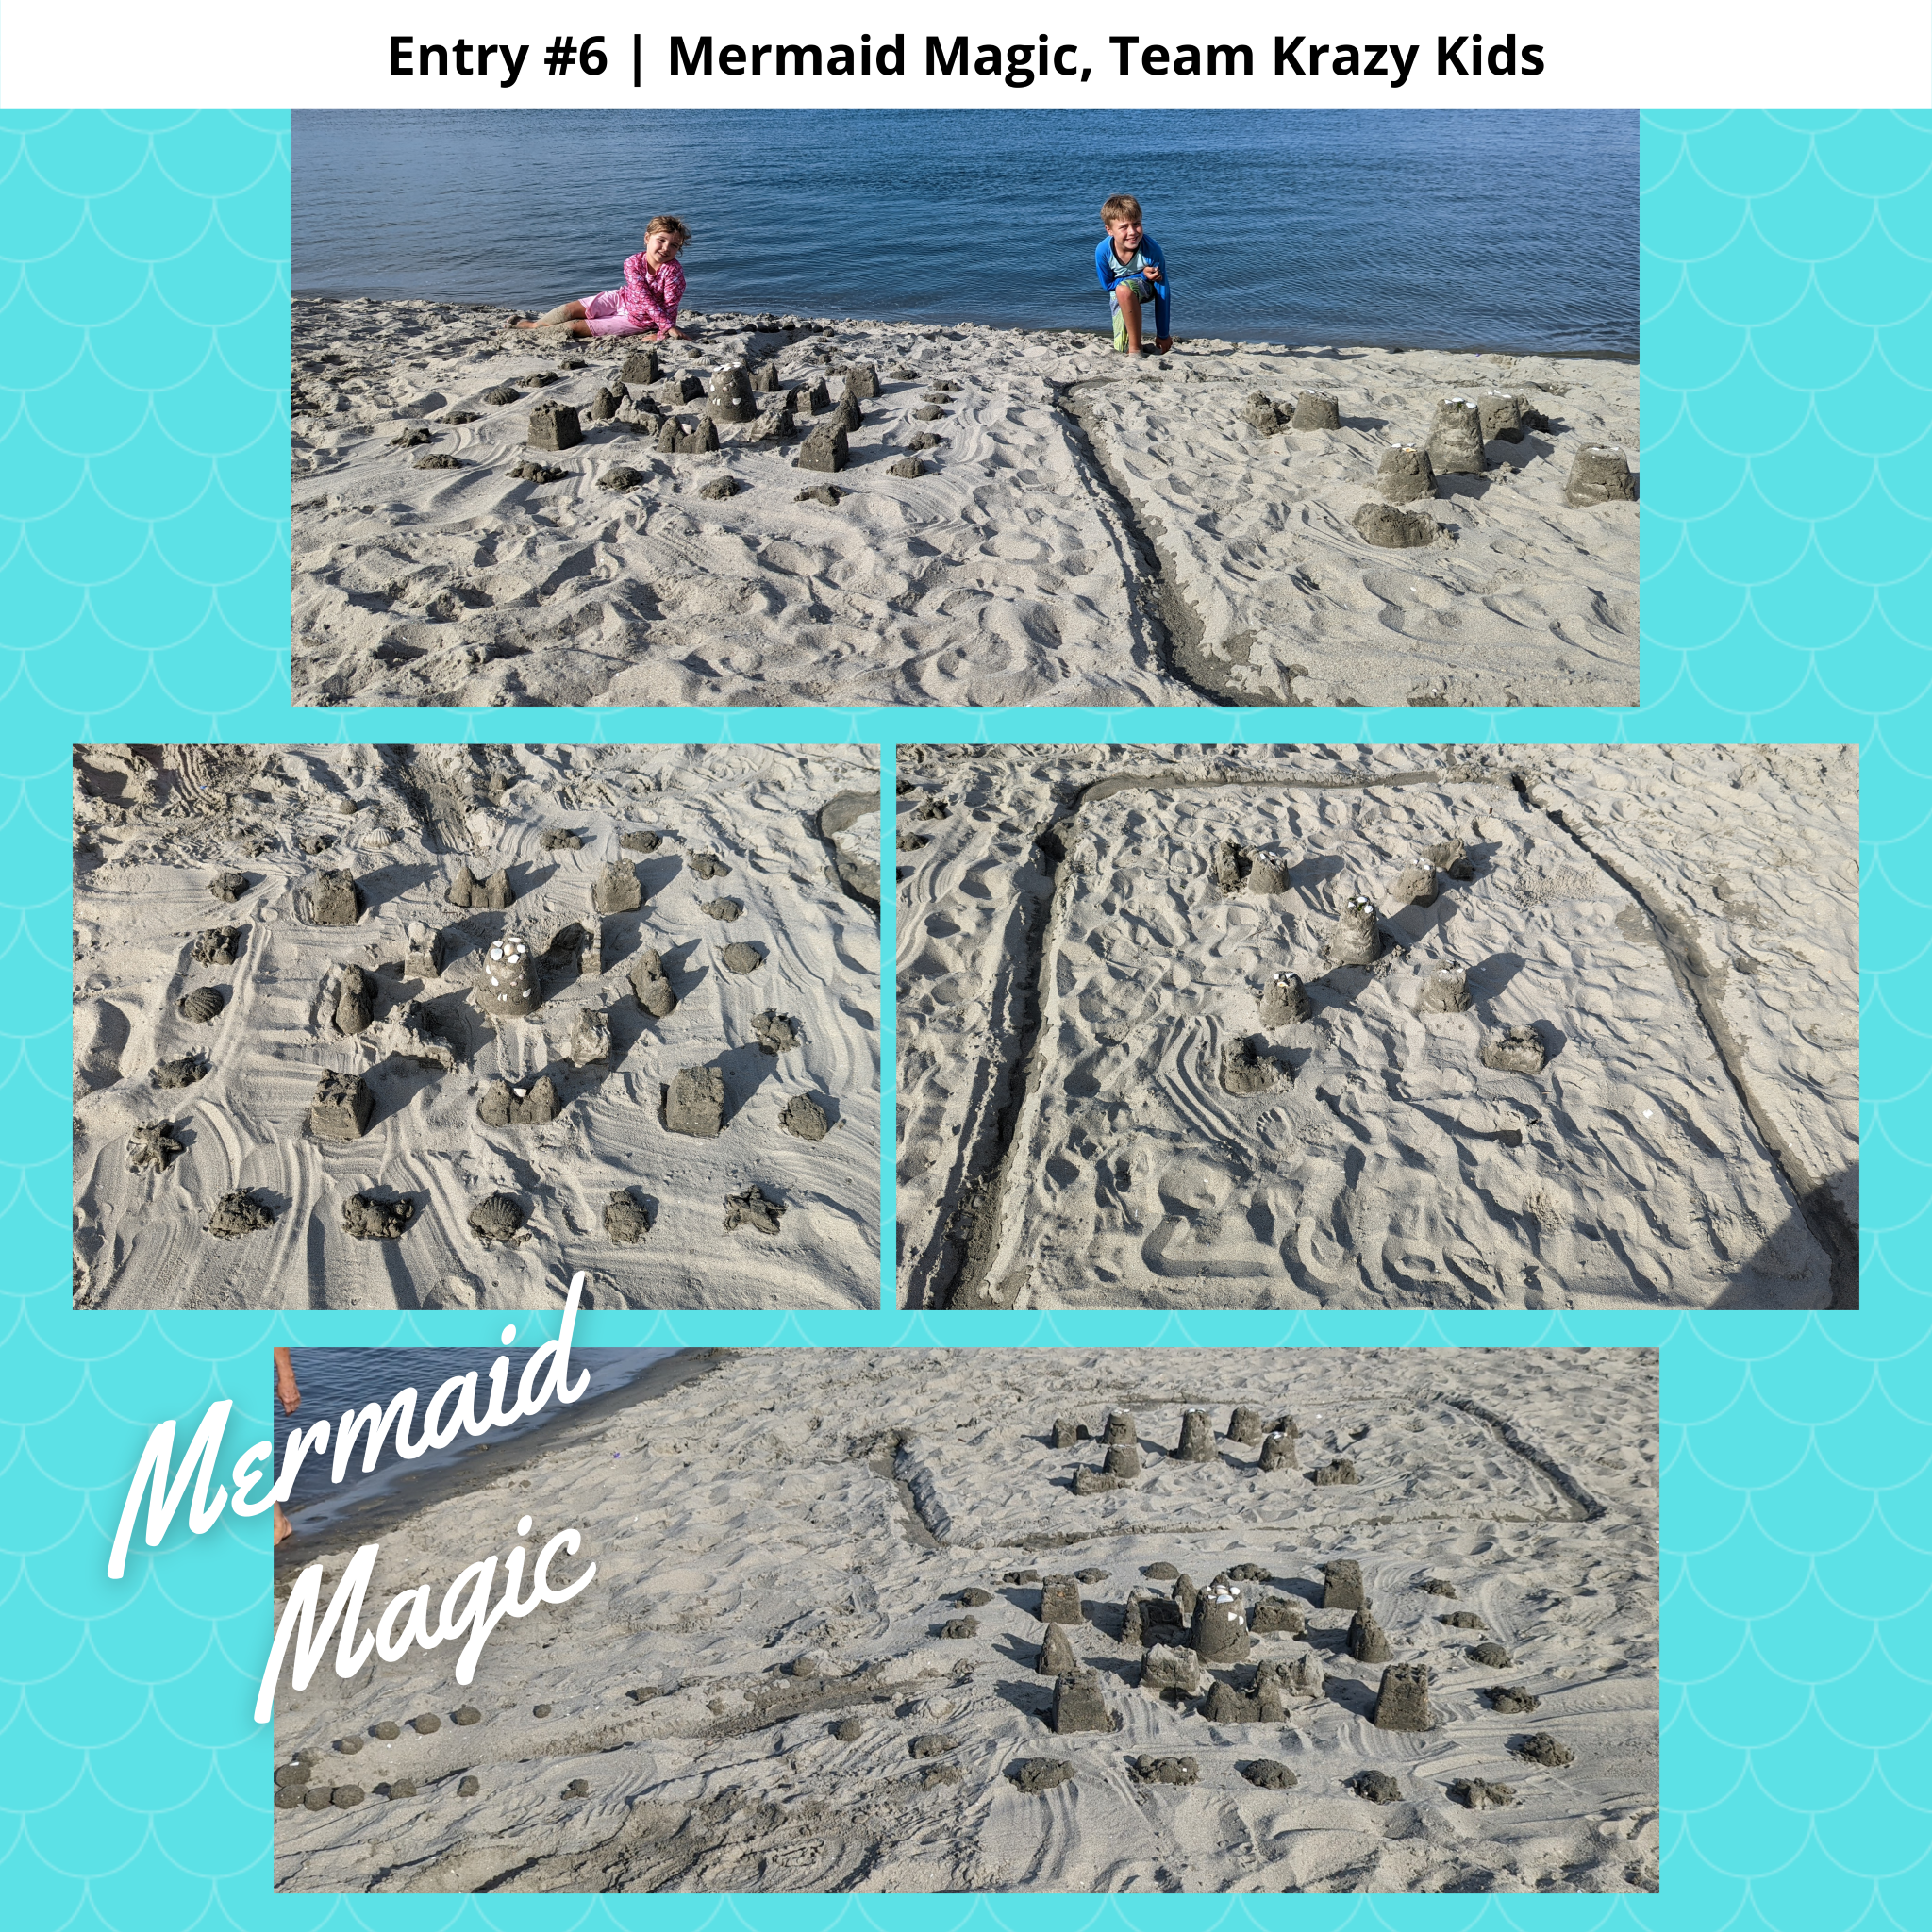 Entry # 6 | Mermaid Magic